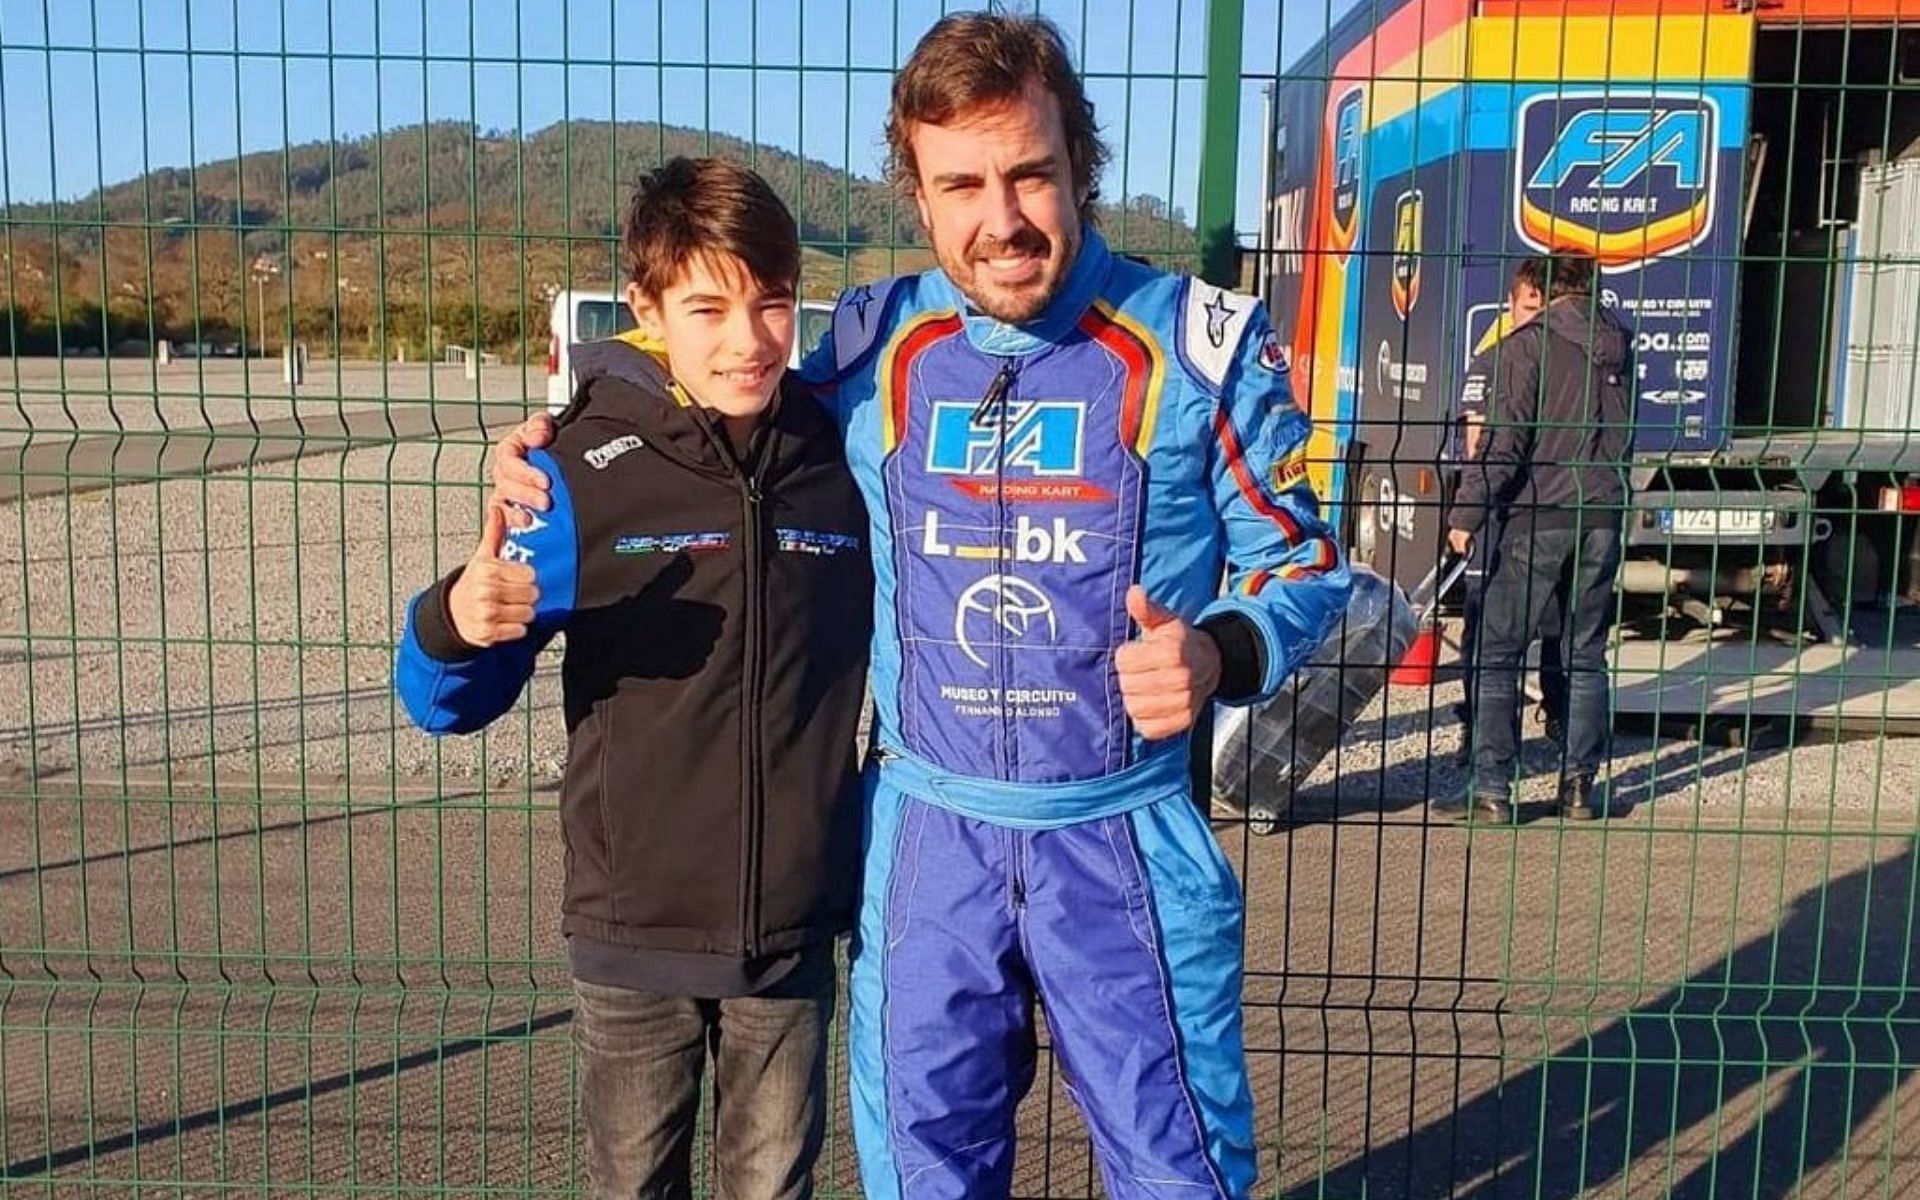 Nicola Tsolov (left) and Fernando Alonso (right) Courtesy: Twitter/@startonpole